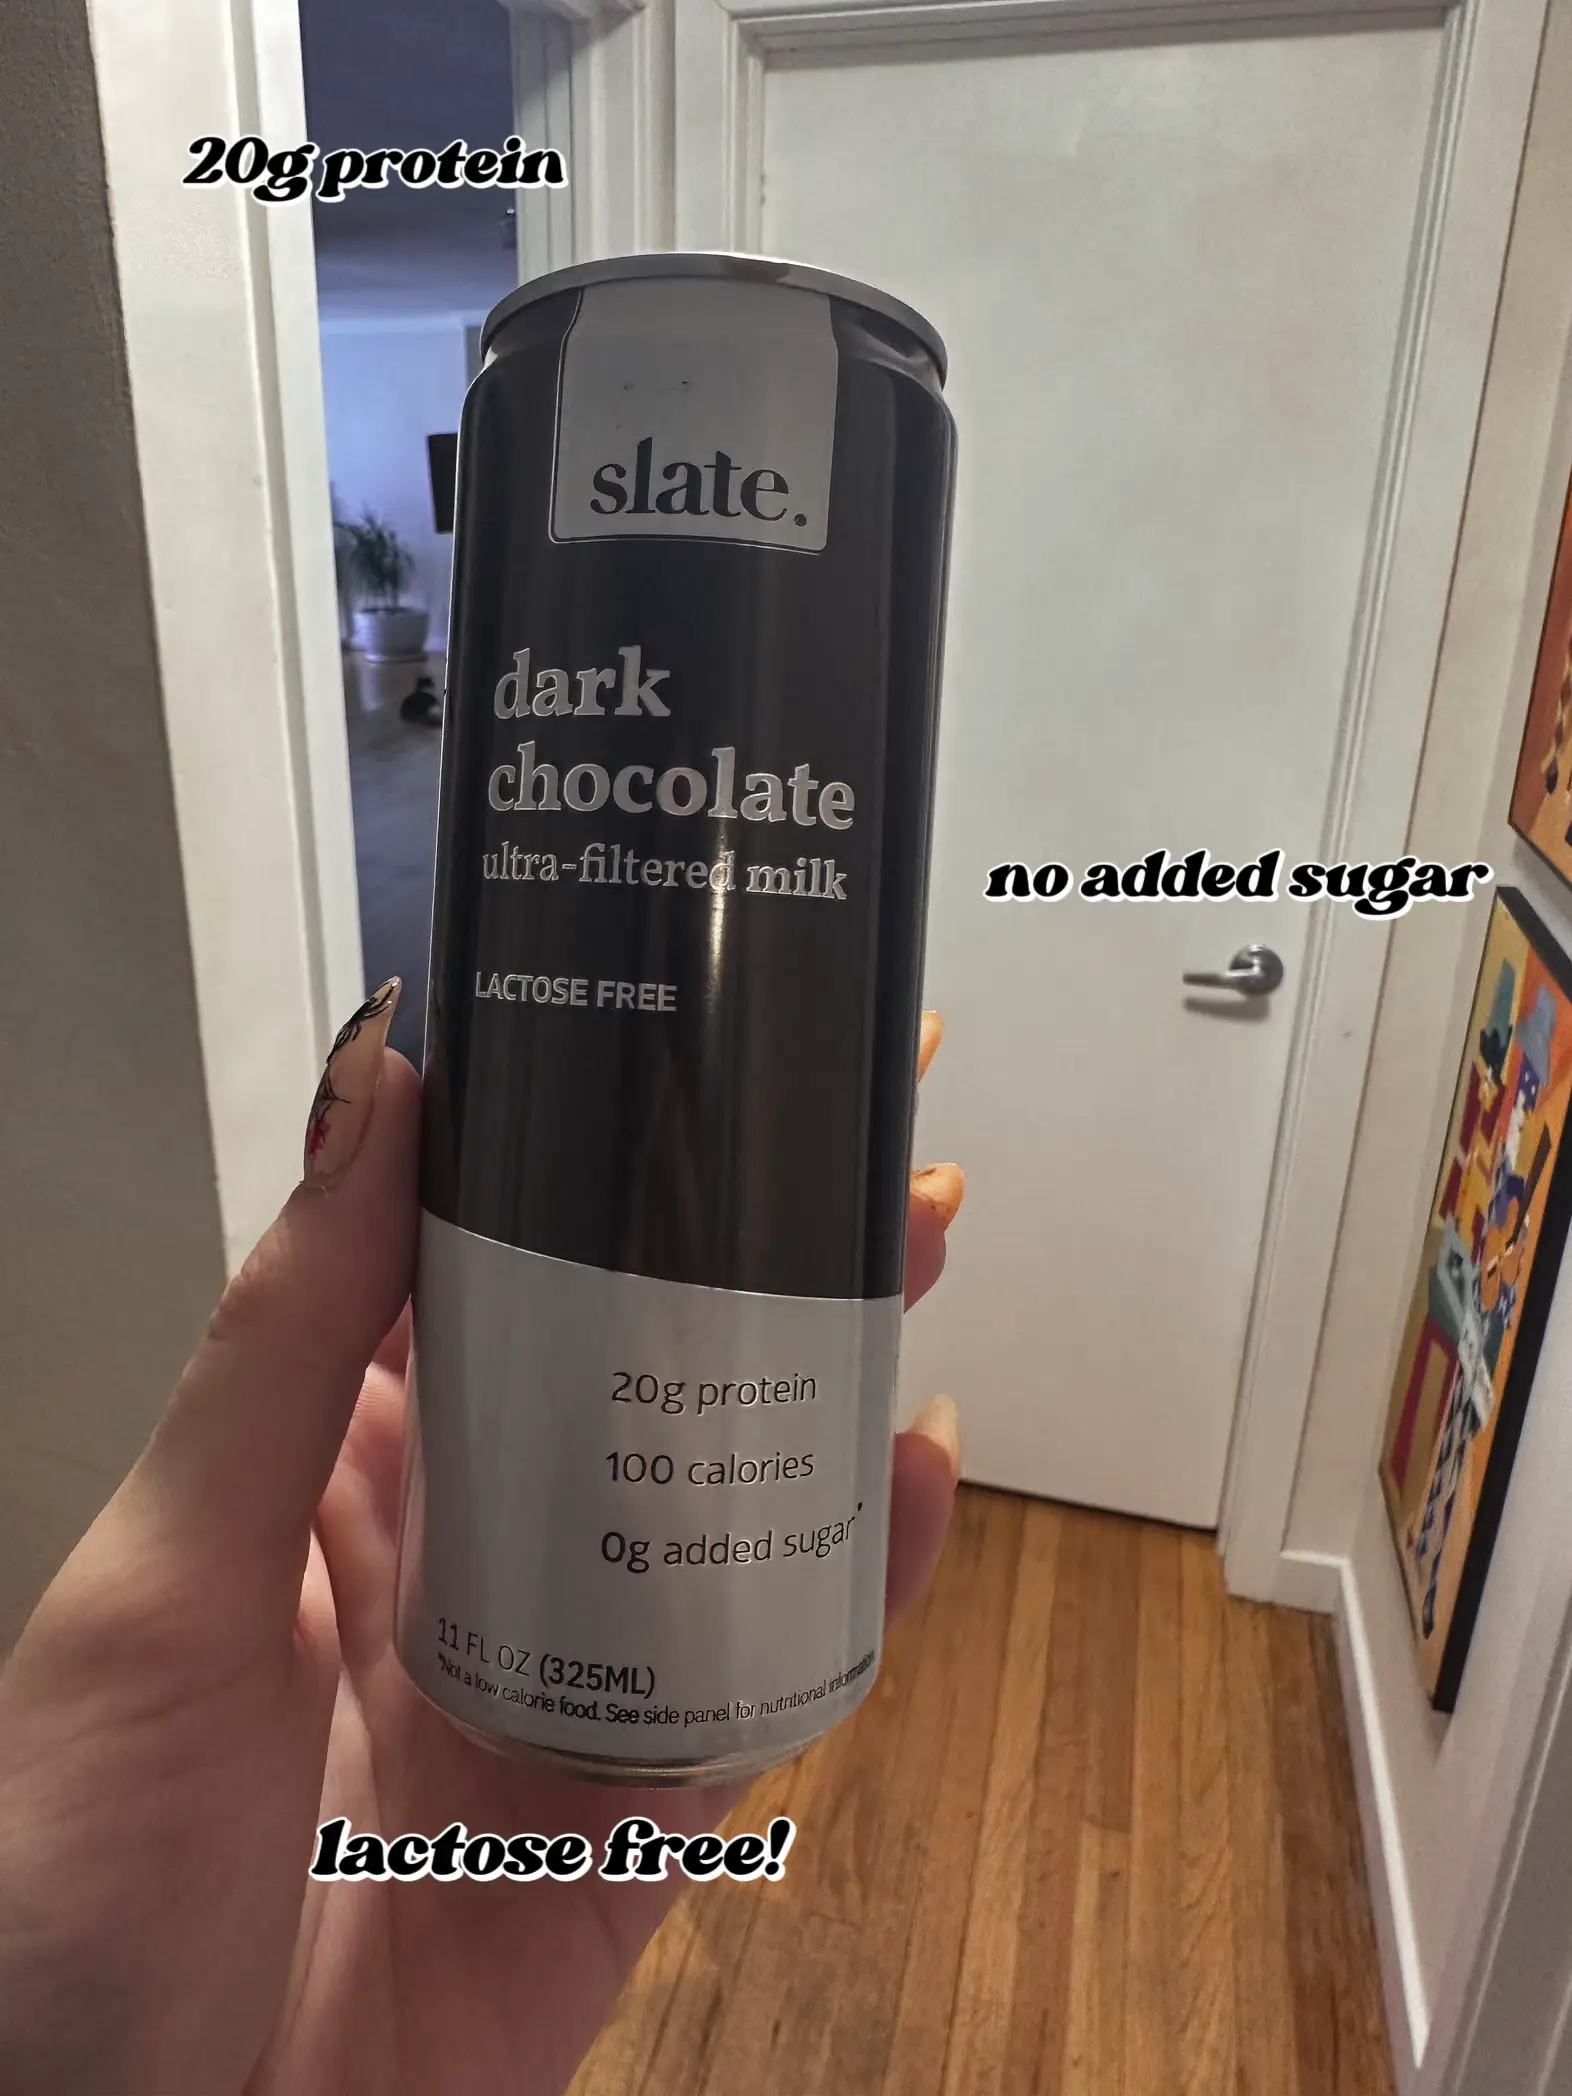 Slate Milk, Classic Chocolate - 11 fl oz